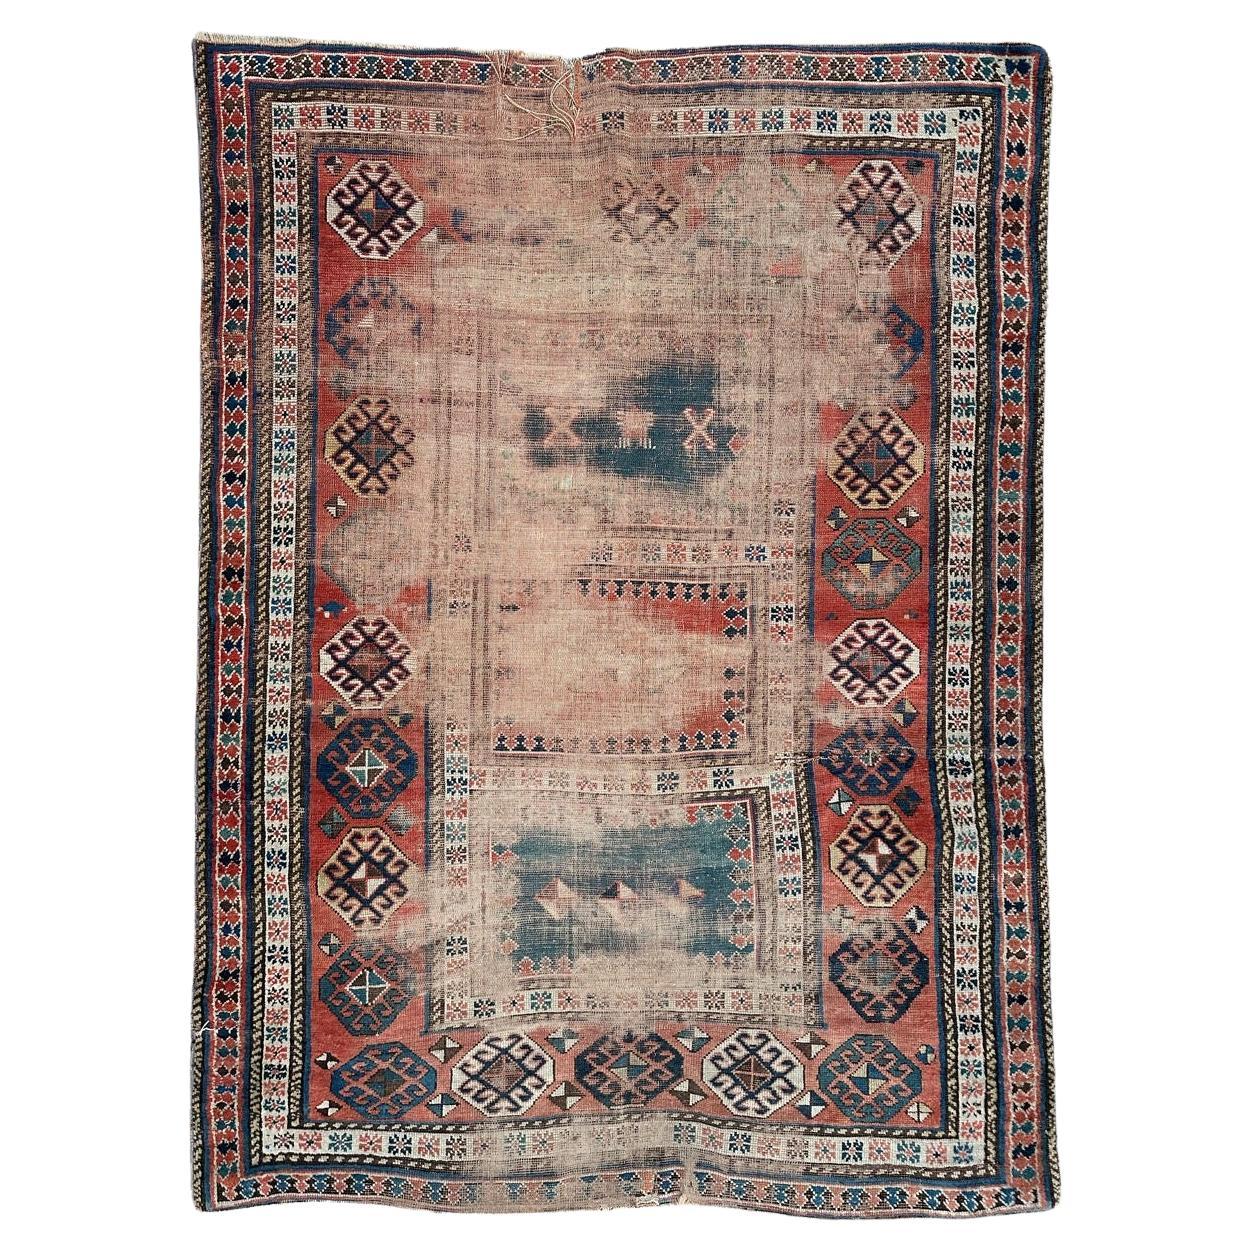 Bobyrug’s pretty antique distressed Kazak rug For Sale